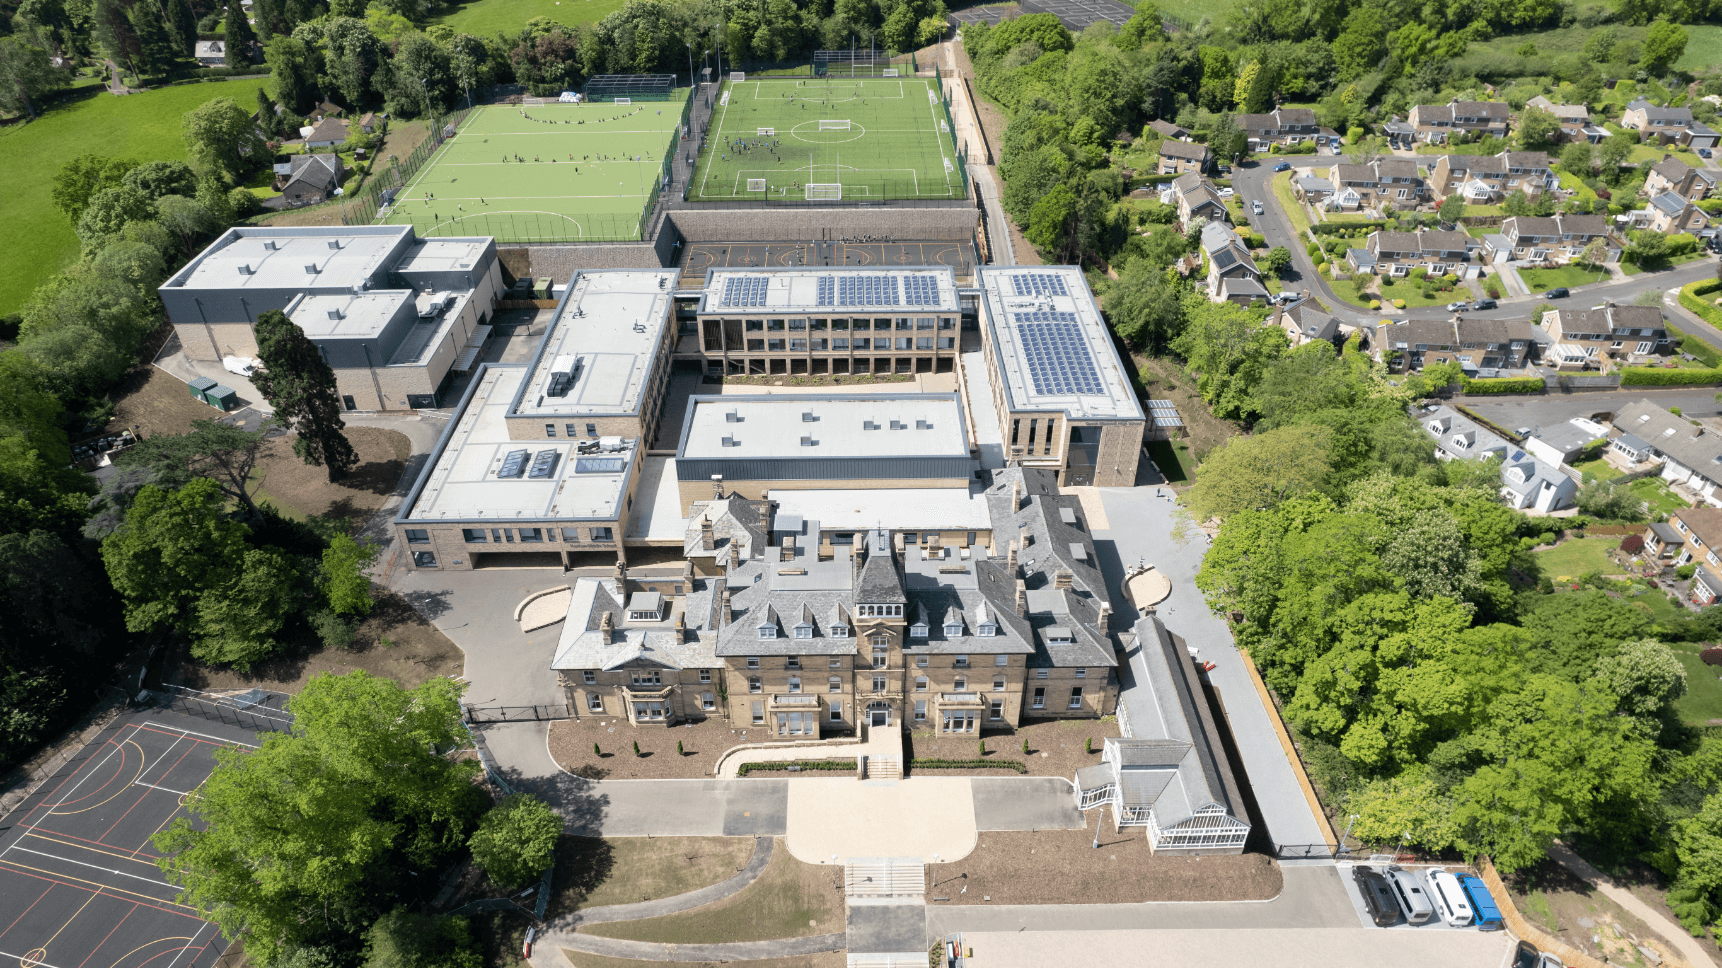 Queen Elizabeth High School from the air